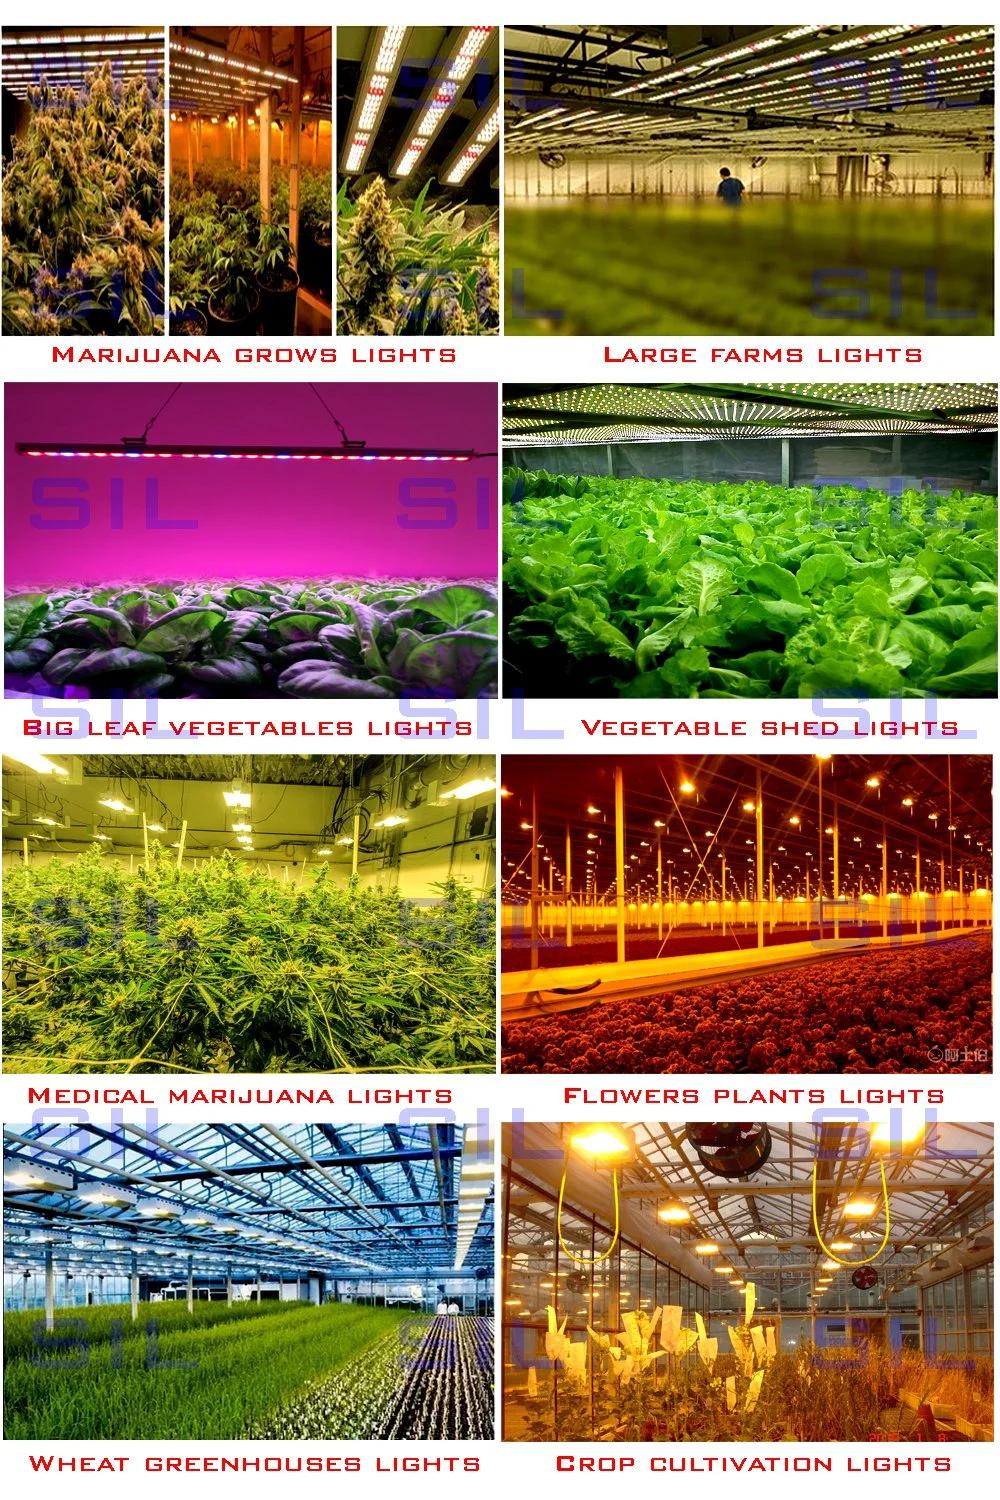 Wholesale Price Indoor Grow Lights 600watt 640W 660W 720W 800W 960W Medical Plant Vegetables Grow Light